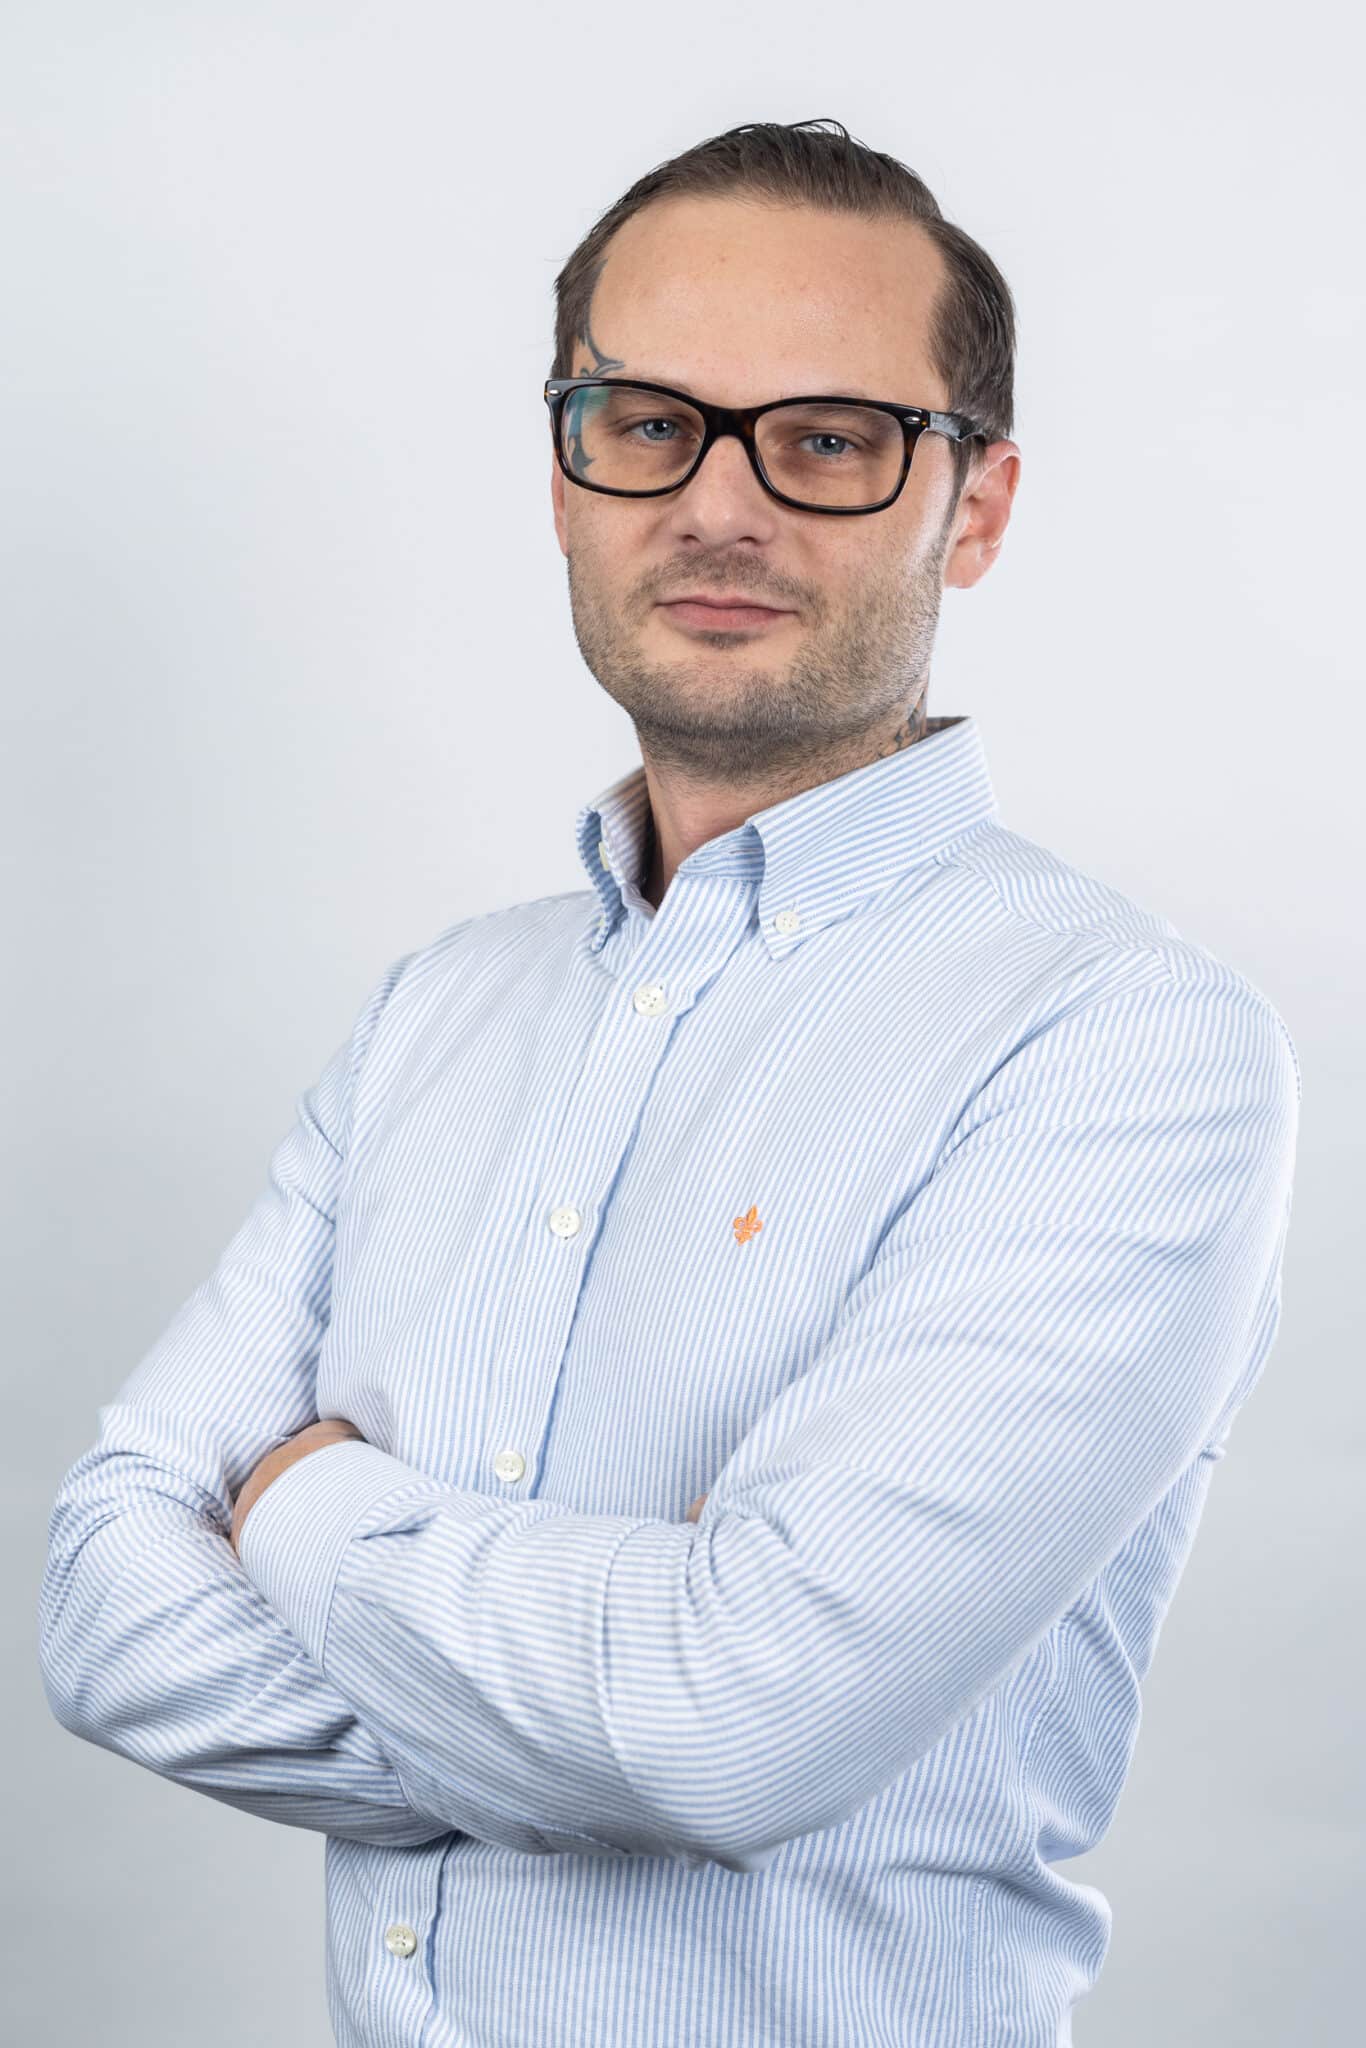 Thomas Eklöf, Project Manager at Bladefence Europe